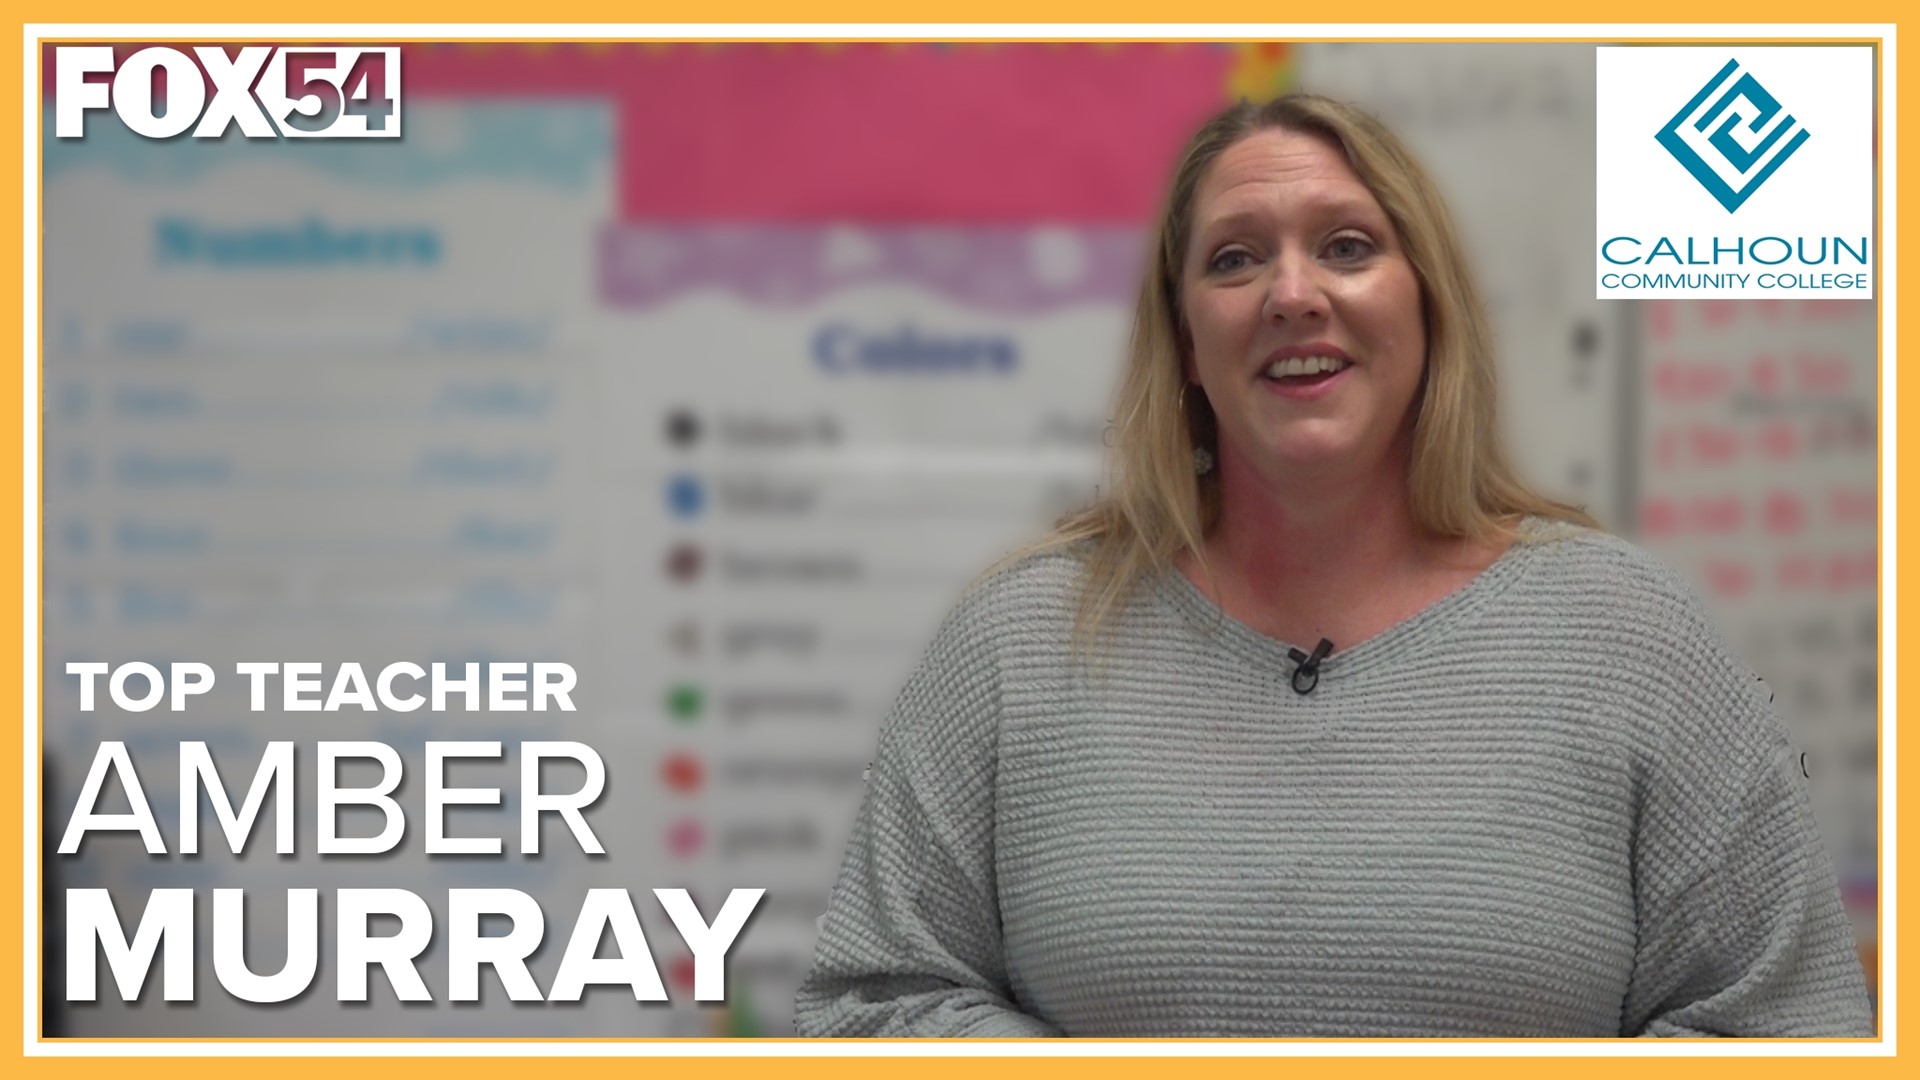 Amber Murray of Hazlewood Elementary is the Valley's Top Teacher!